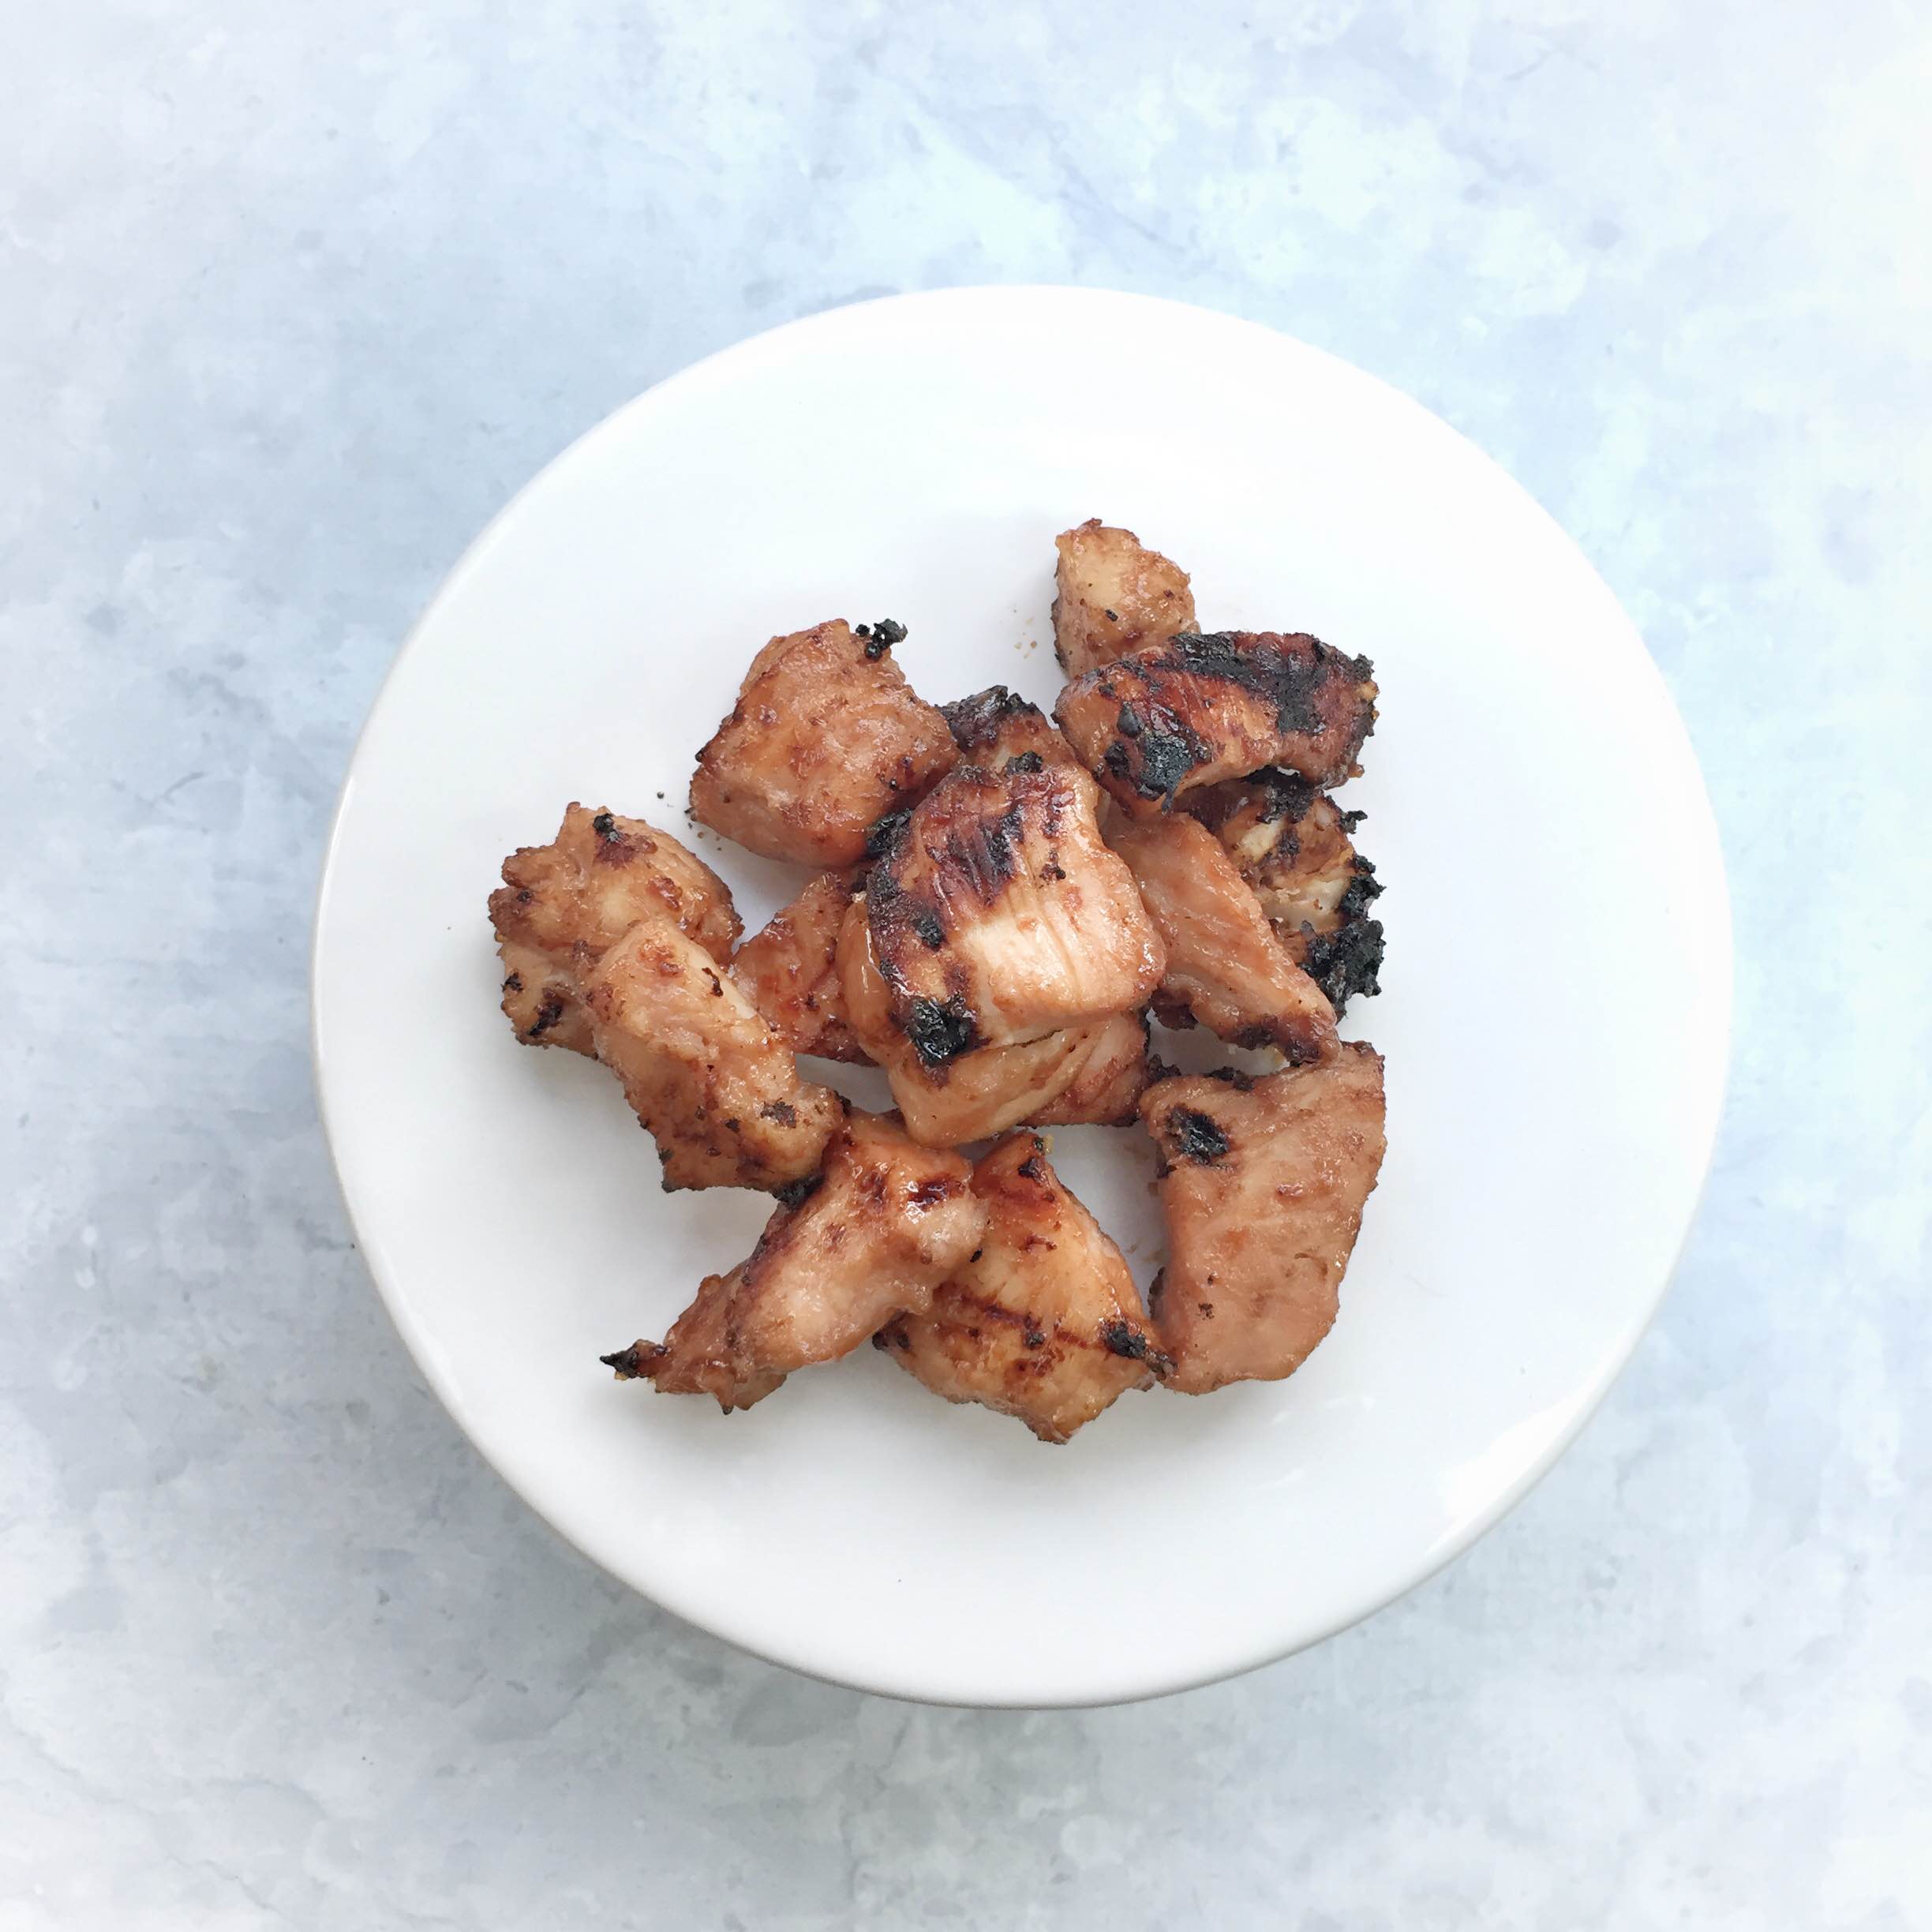 Honey garlic turkey tips | Summer grilling tips | Marinated turkey on the grill recipes! GinaKirk.com @ginaekirk